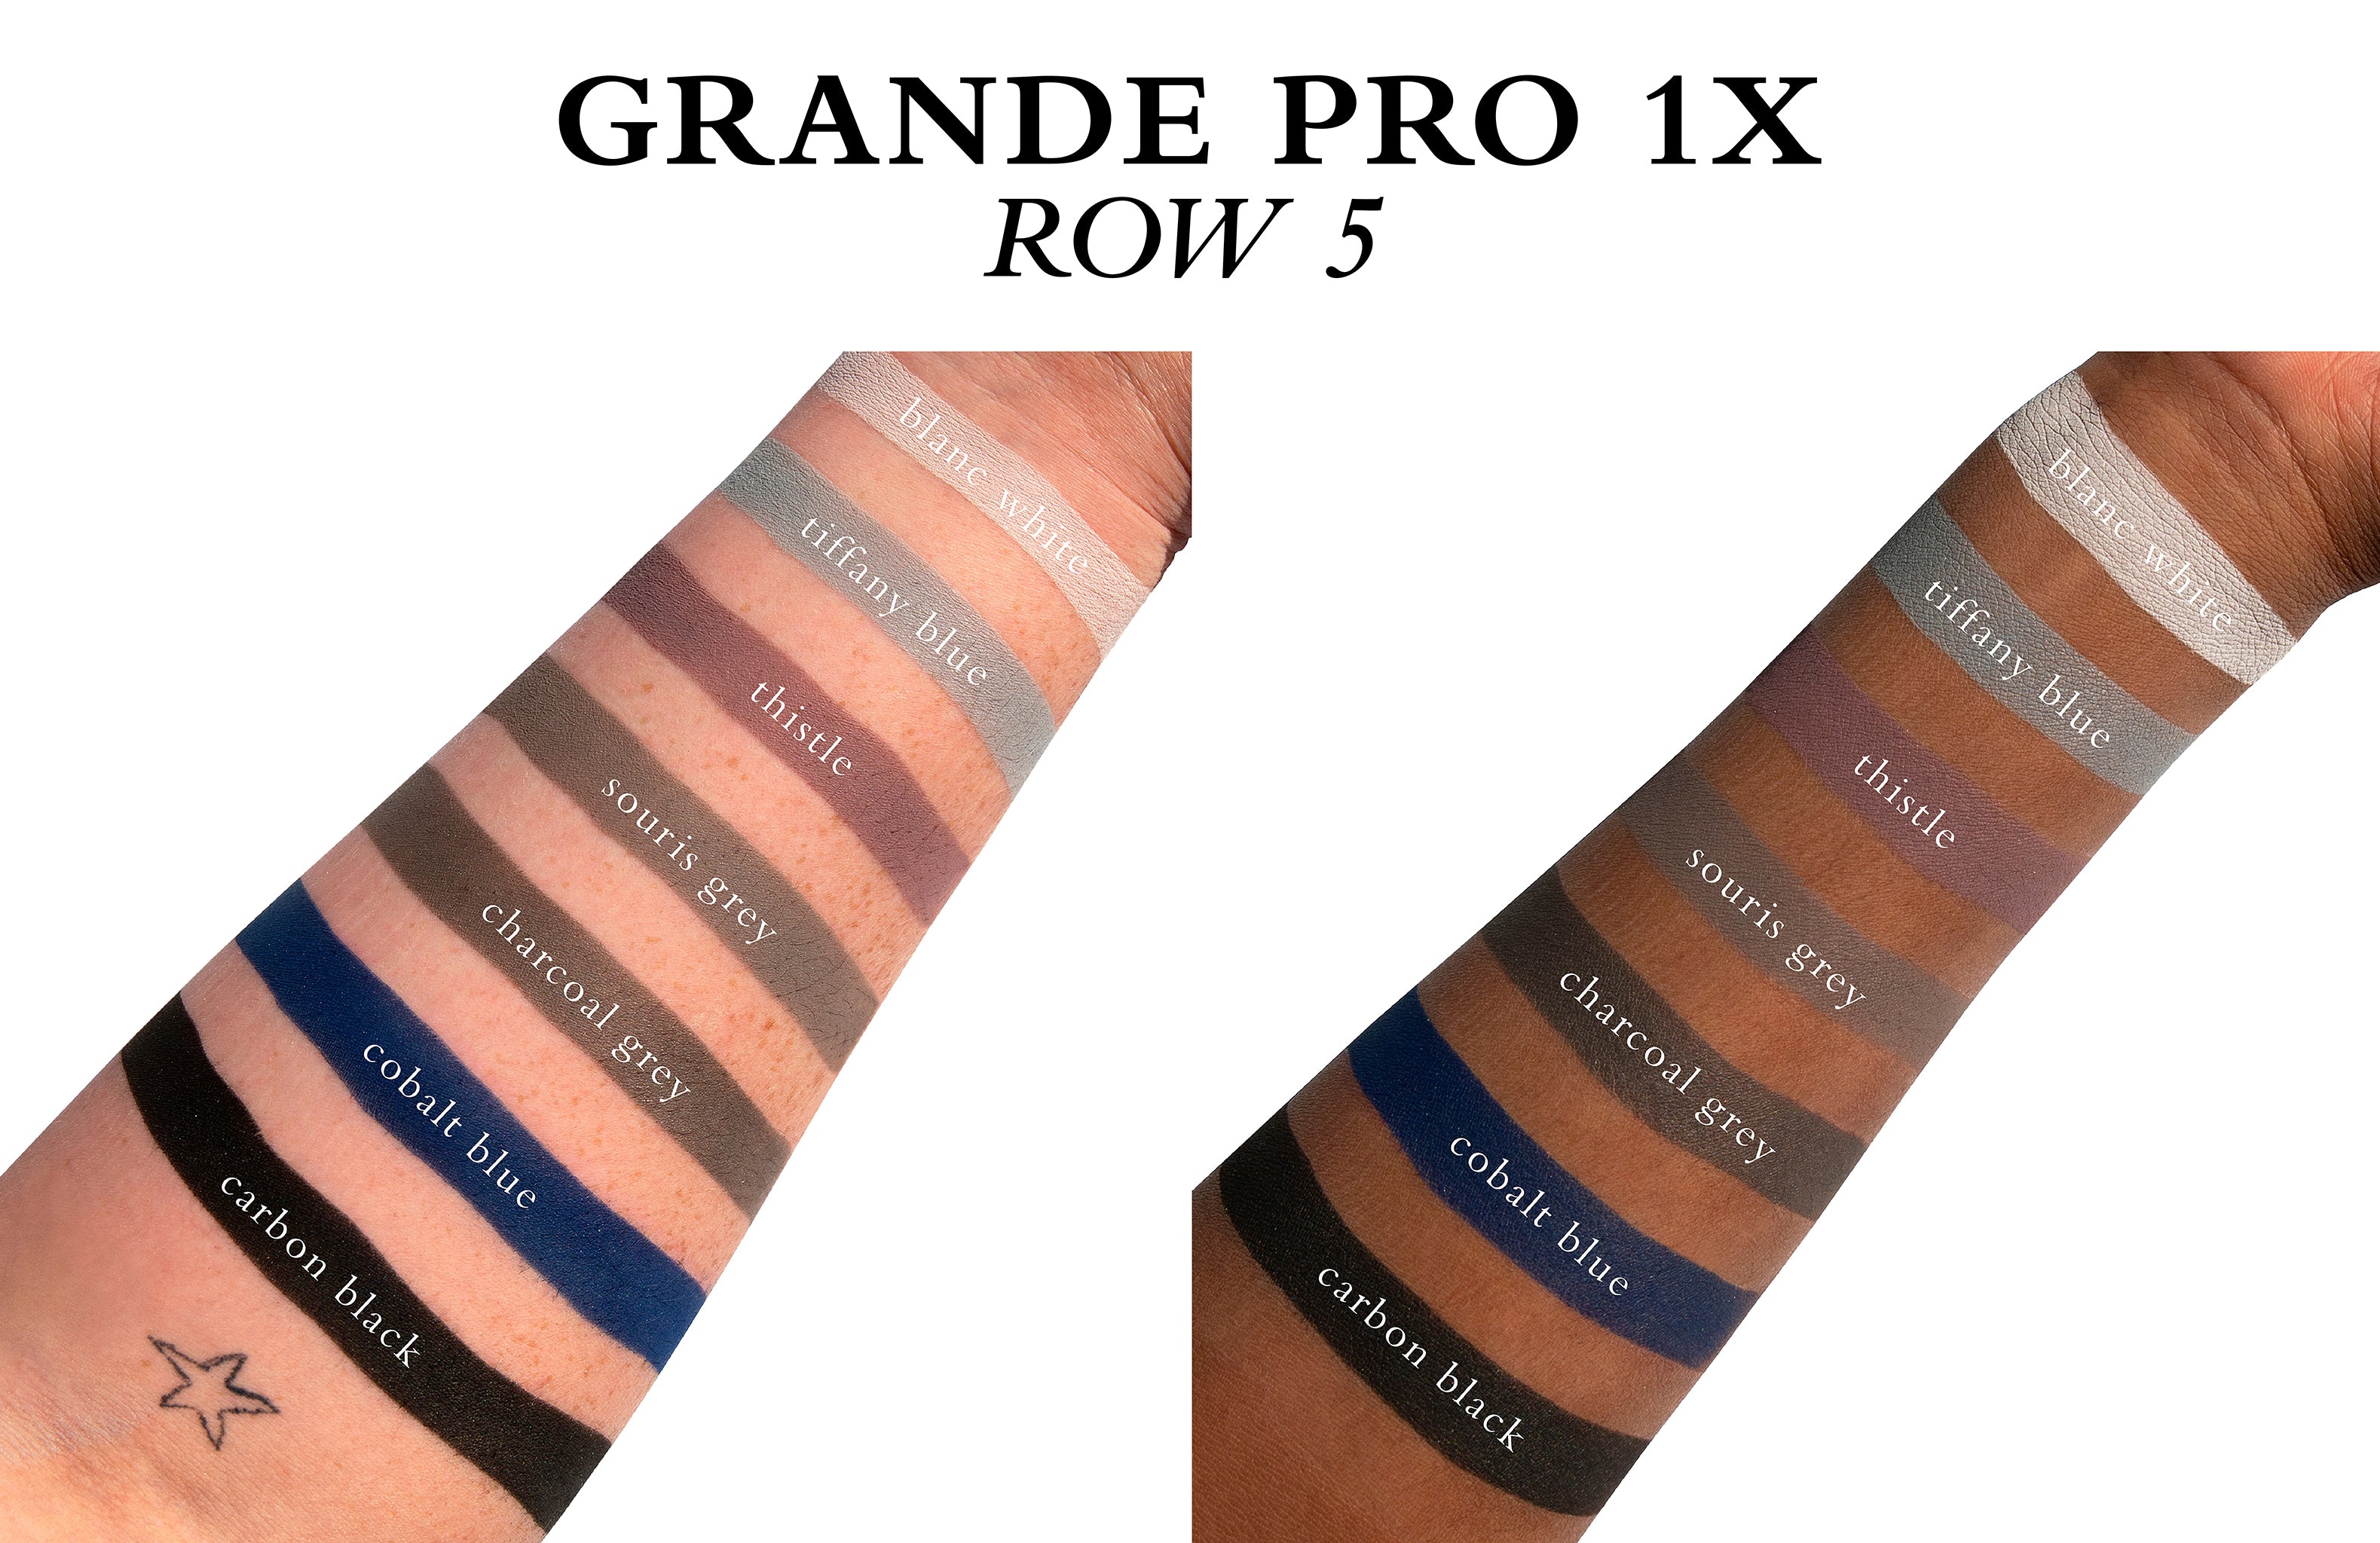 Viseart Paris Grande Pro 1x Eyeshadow Palette Shades